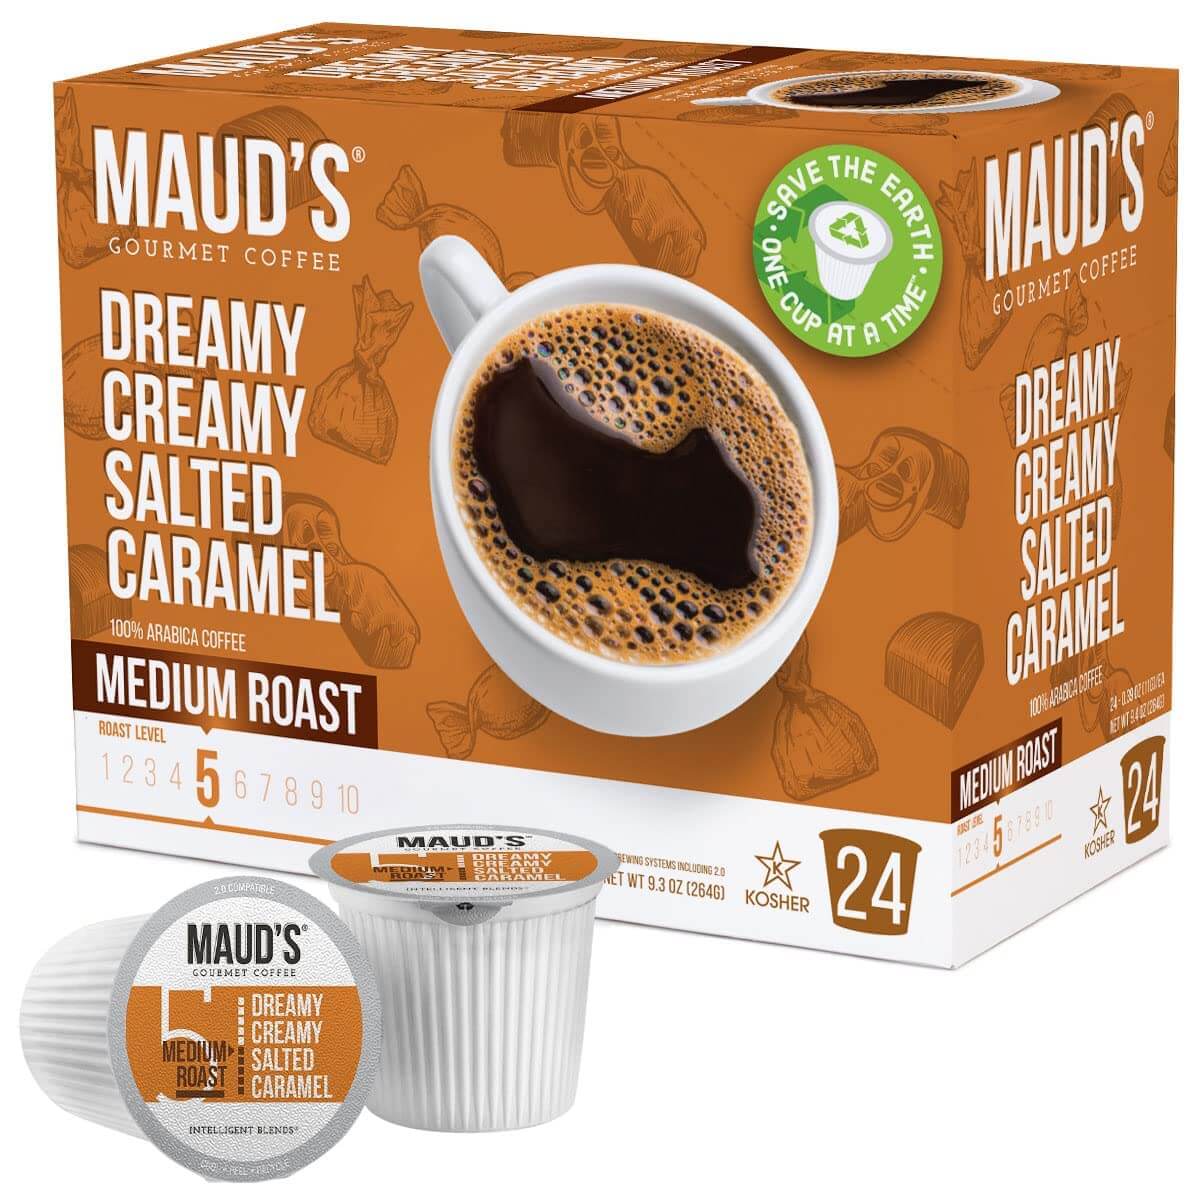 Amazon's Choice: Maud's Dreamy Creamy Salted Caramel